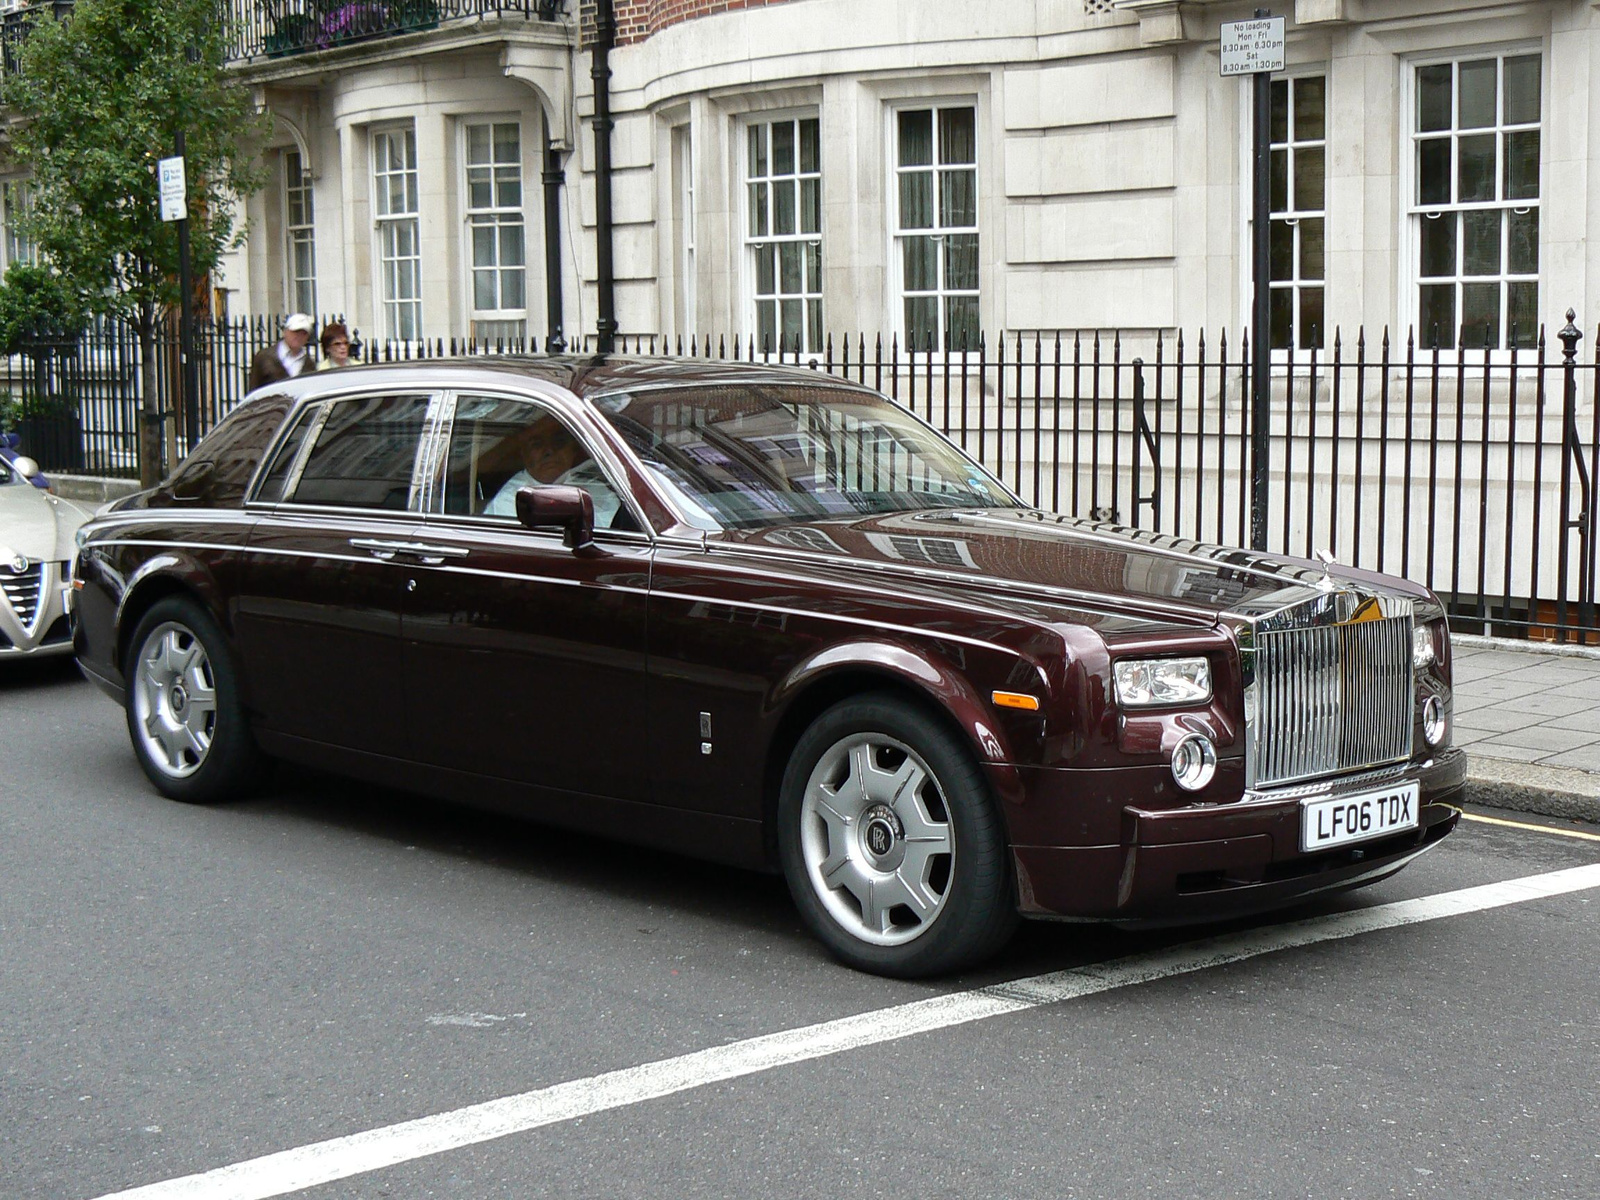 (5) Rolls-Royce Phantom